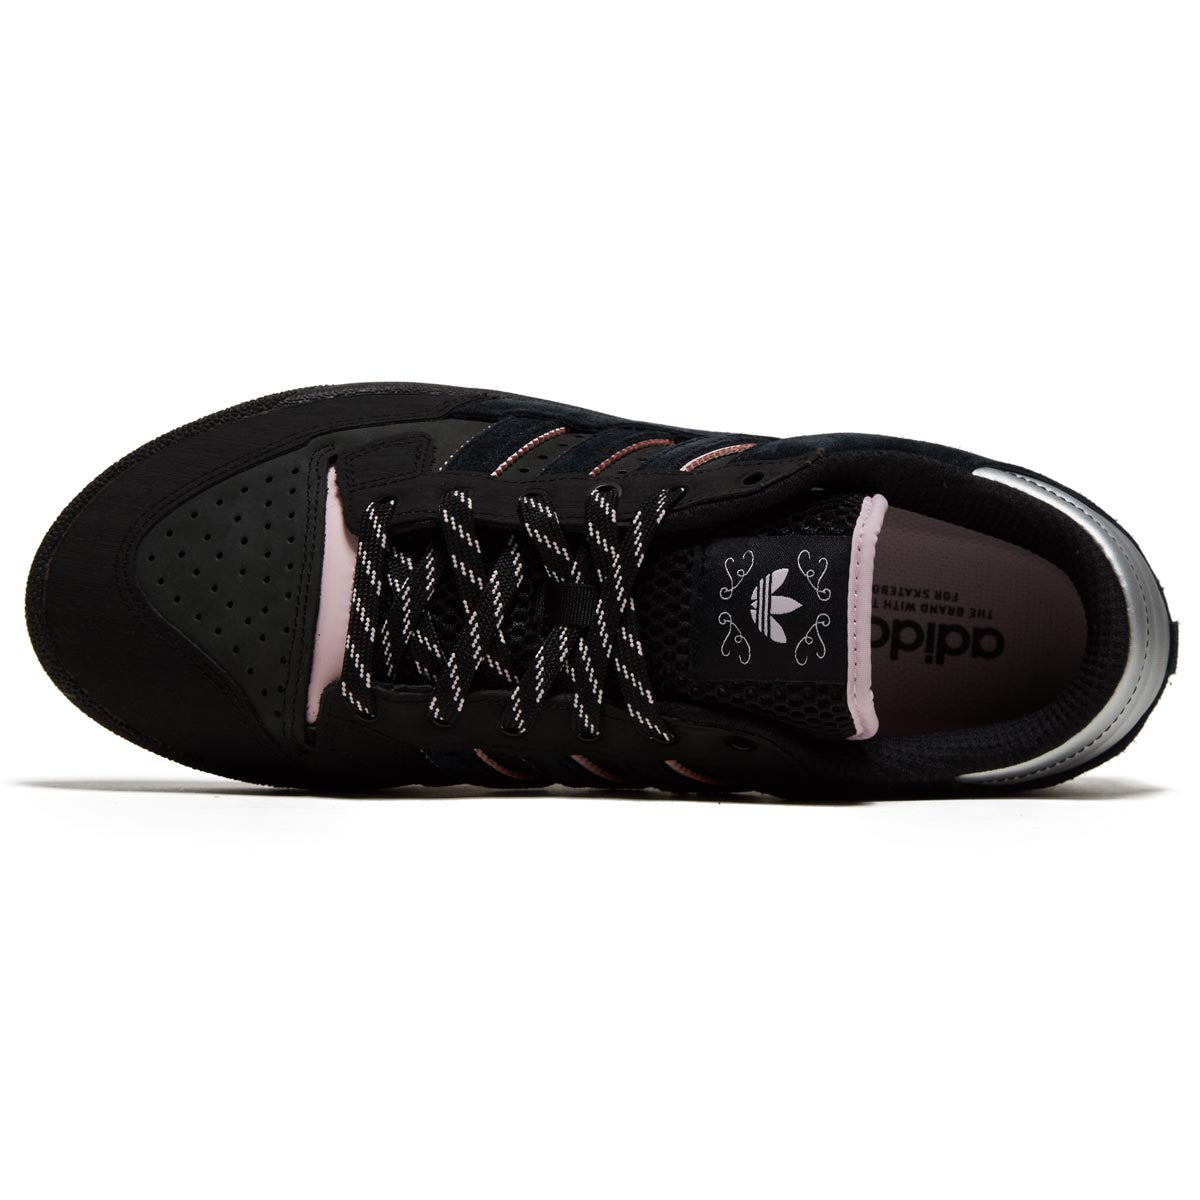 Adidas Centennial 85 Lo ADV x Dre Shoes - Core Black/Clear Pink/Core Black image 3